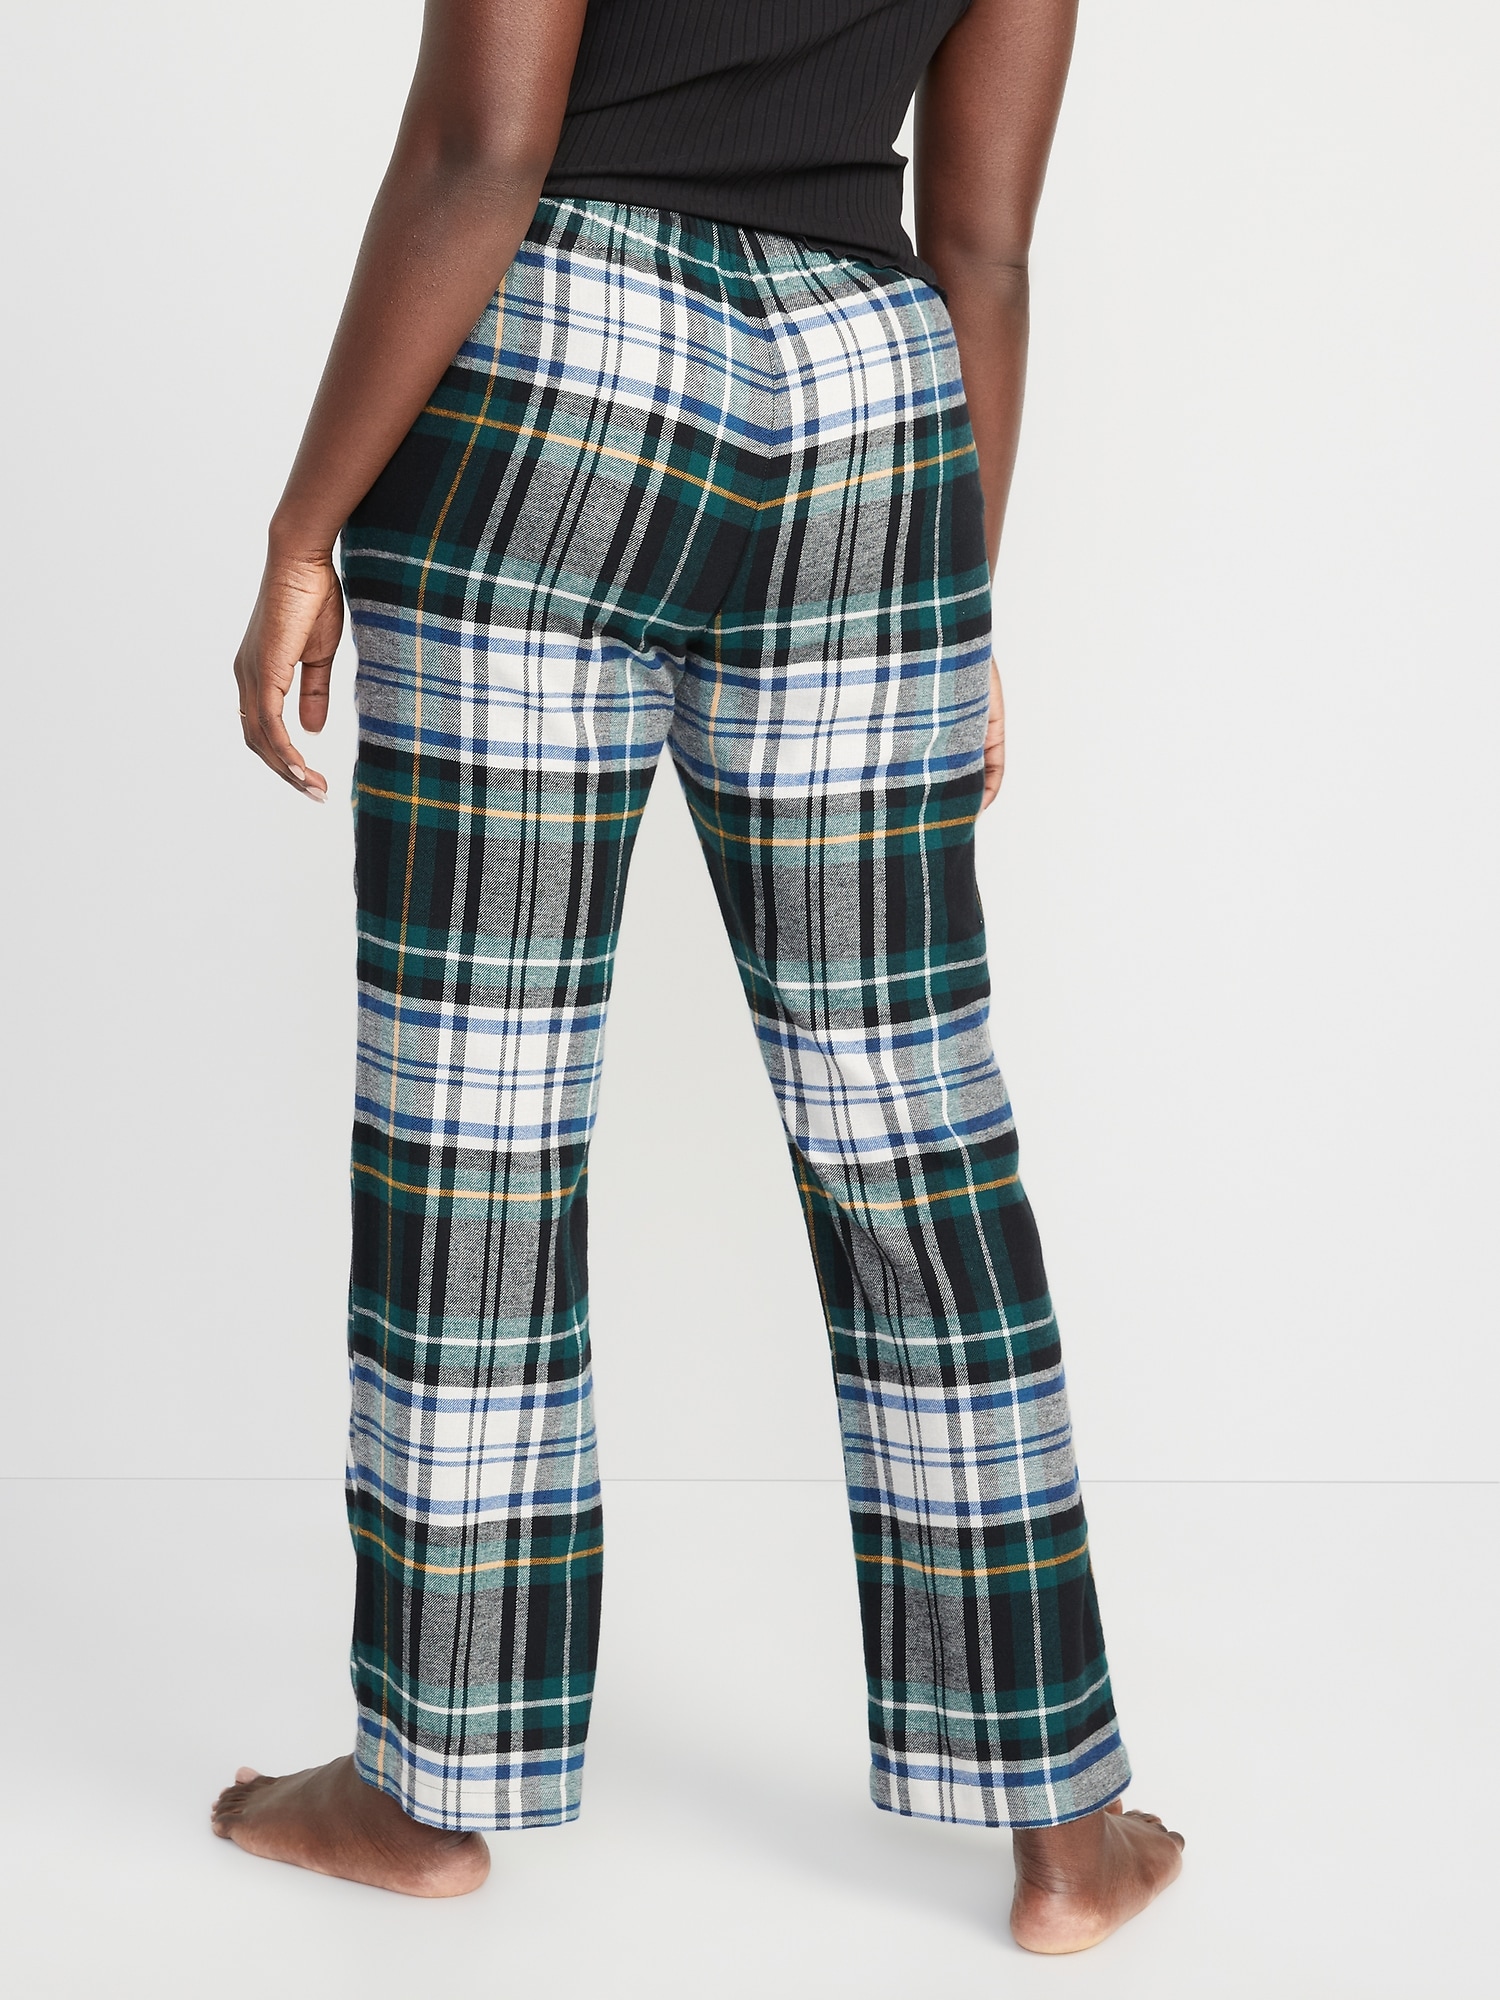 Trendy Men's Lounge Pants with Side Pocket